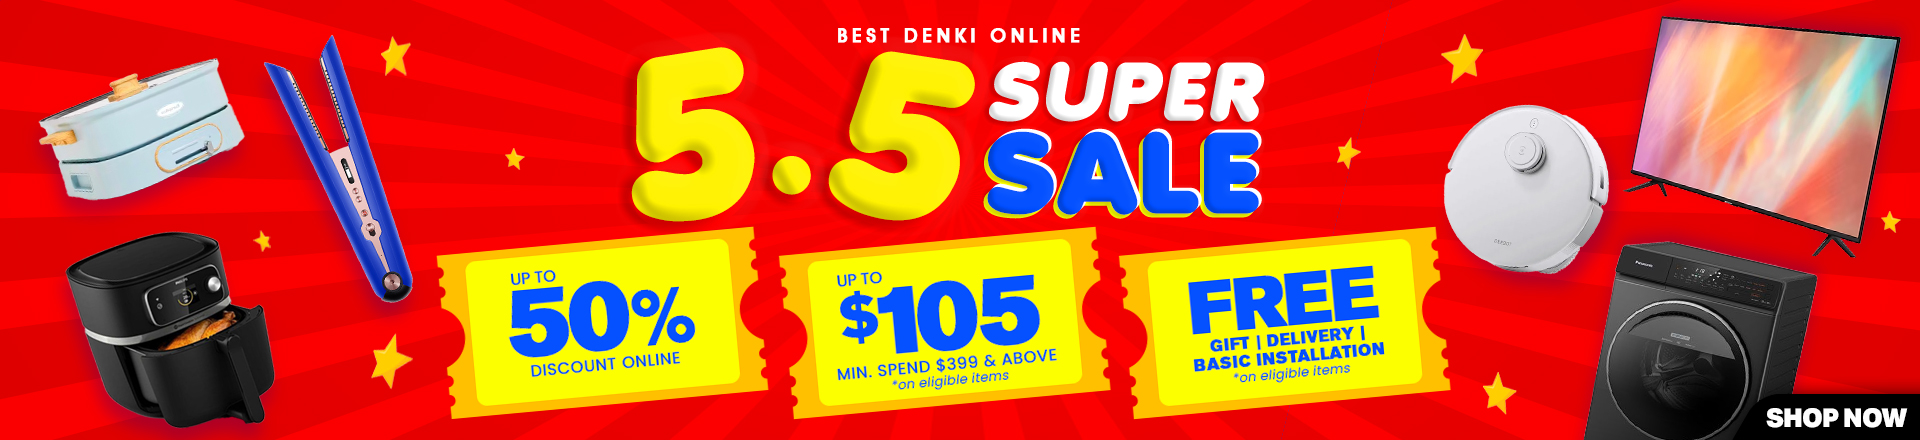 5.5 Super Sale